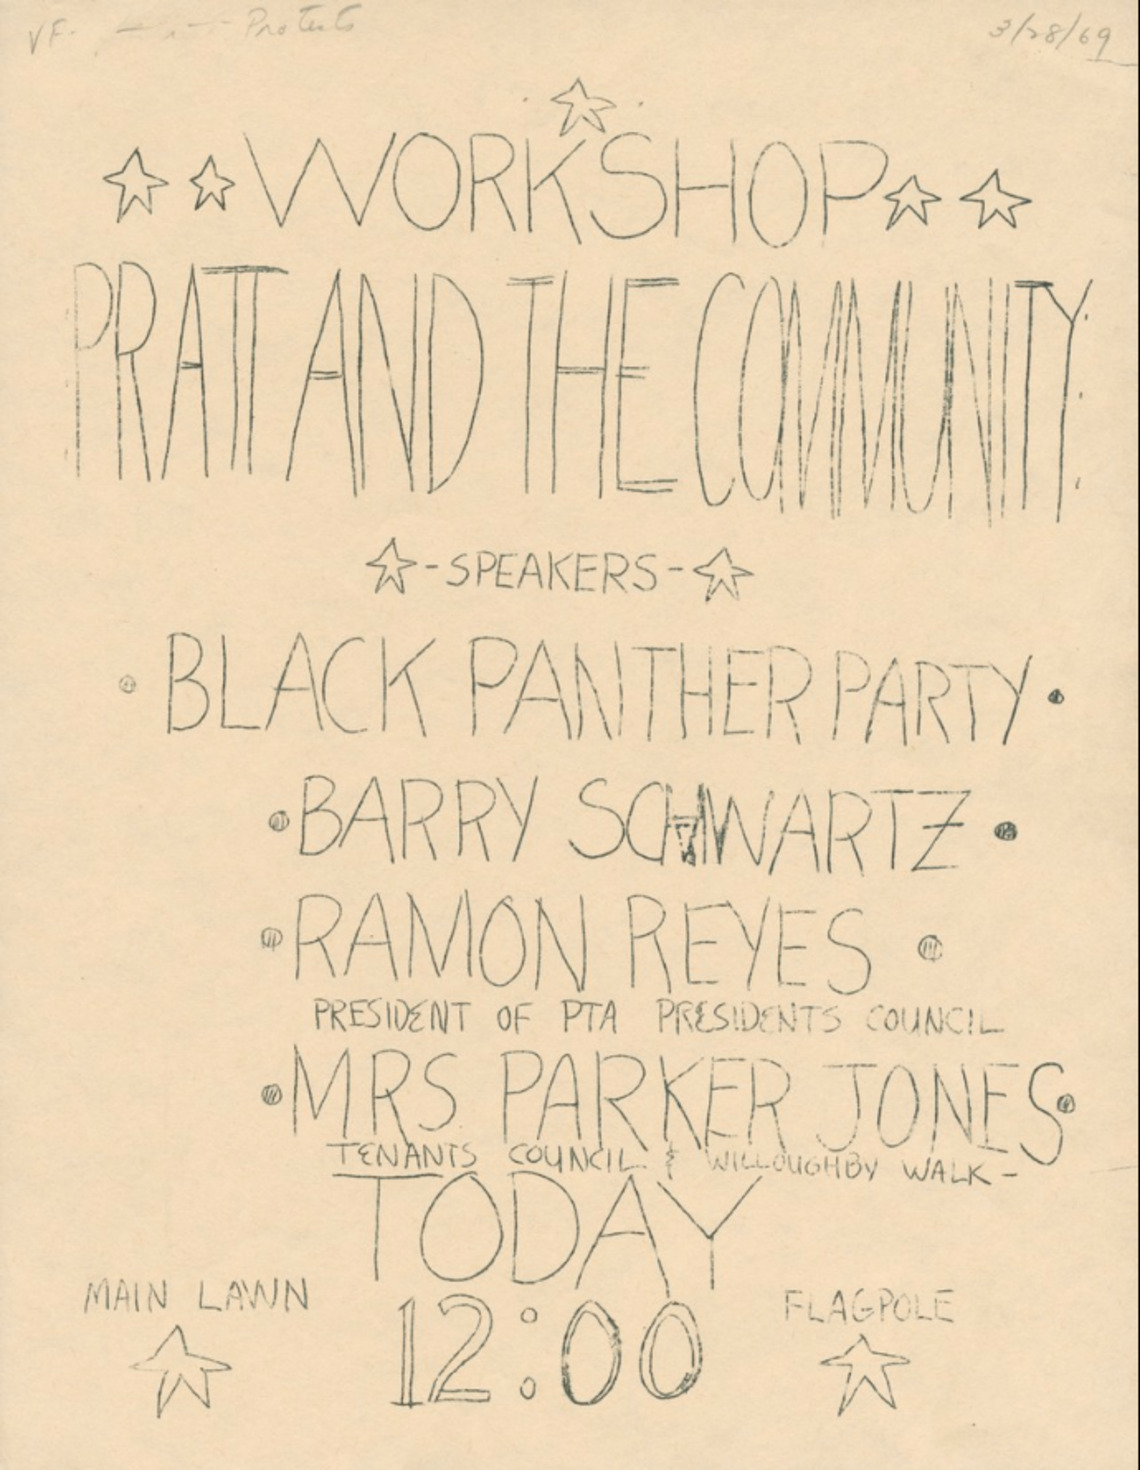 Workshop: Pratt and the Community